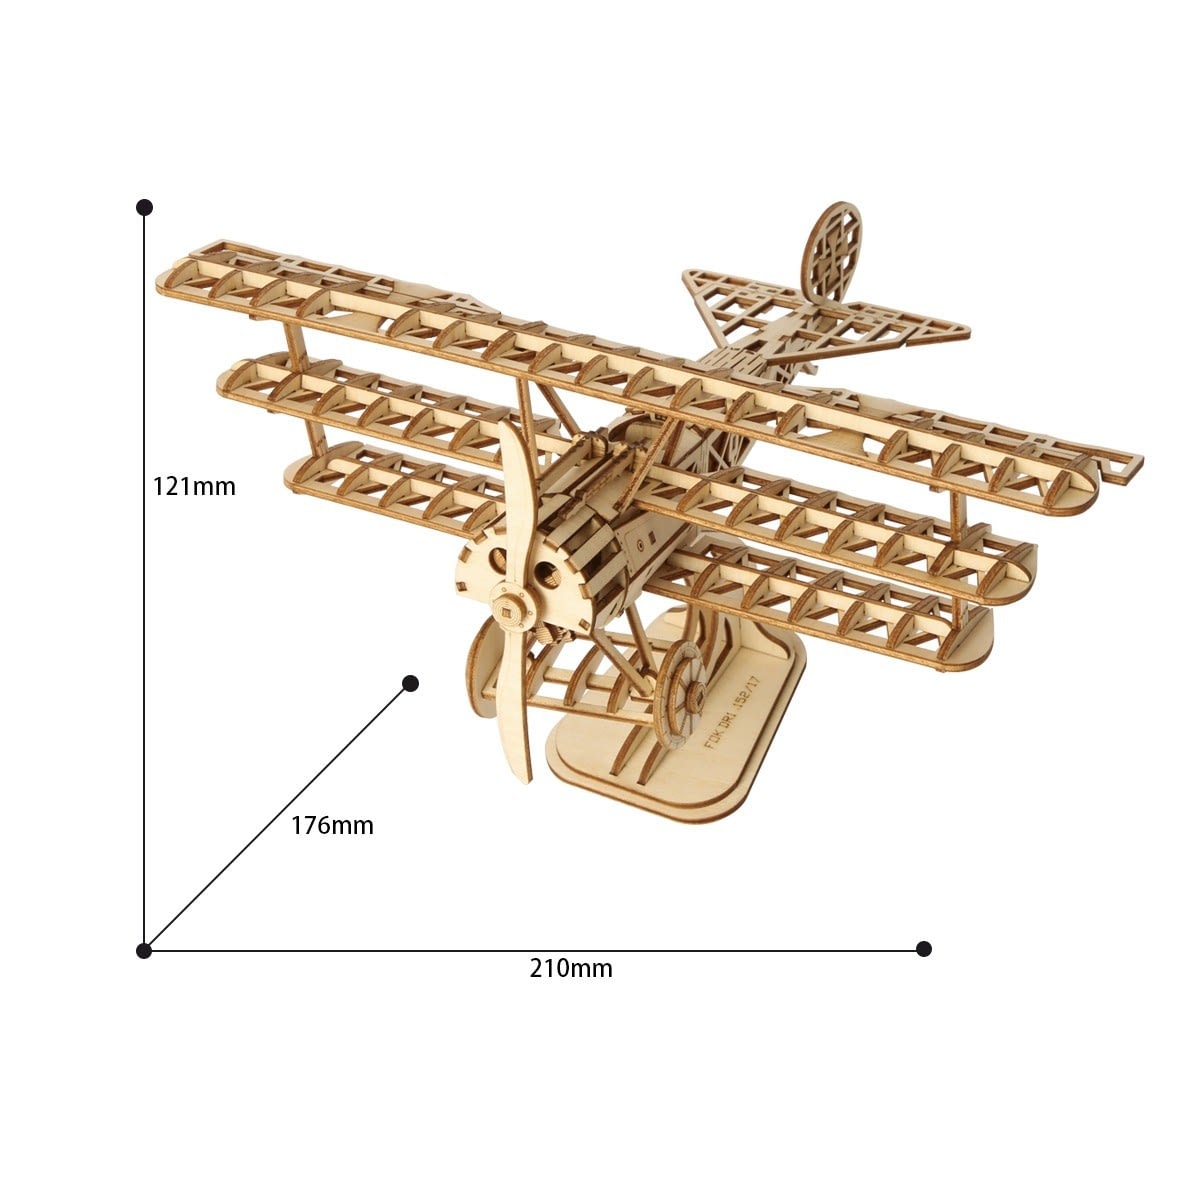 Kinetic Bi-Plane Model